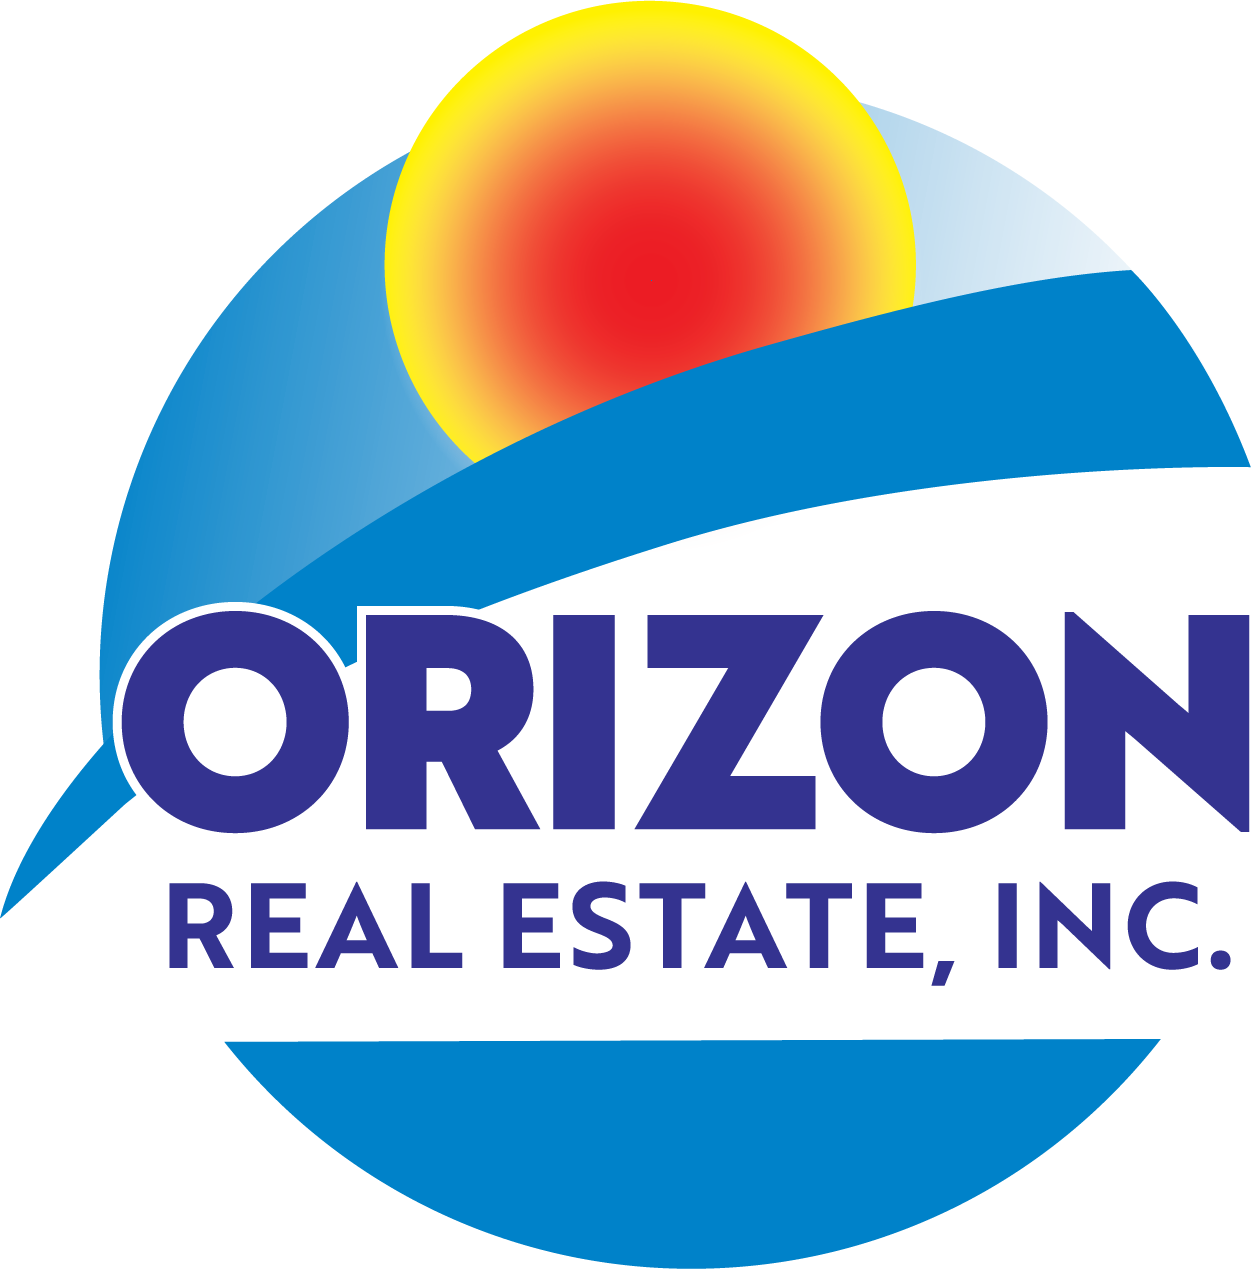 Greg Fahl, Orizon Real Estate